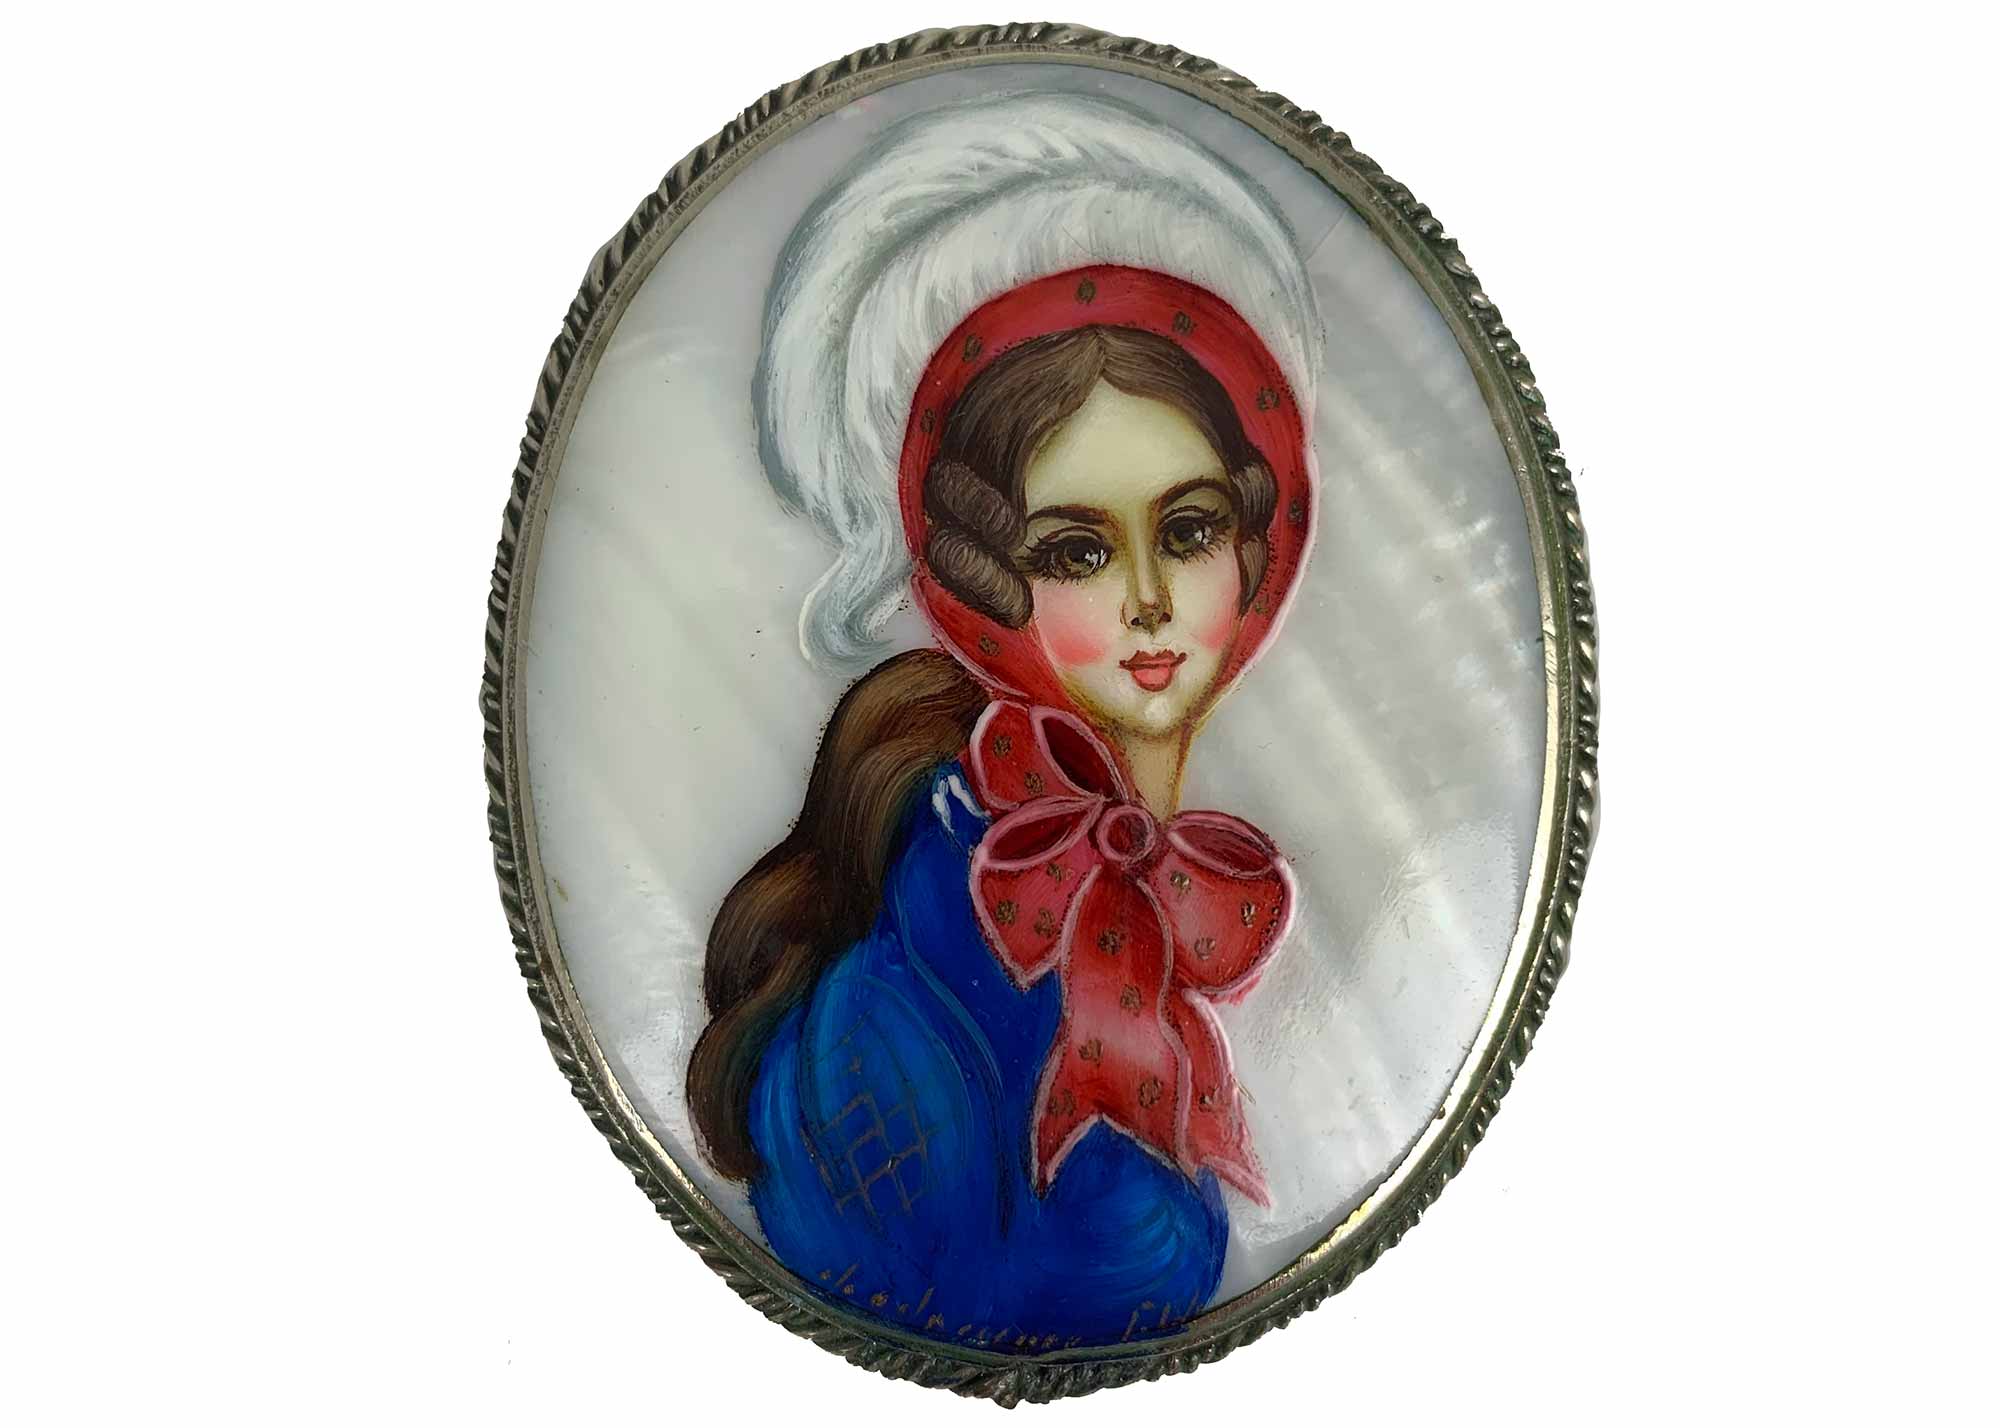 Buy Vintage Mother of Pearl Portrait Brooch Elena at GoldenCockerel.com